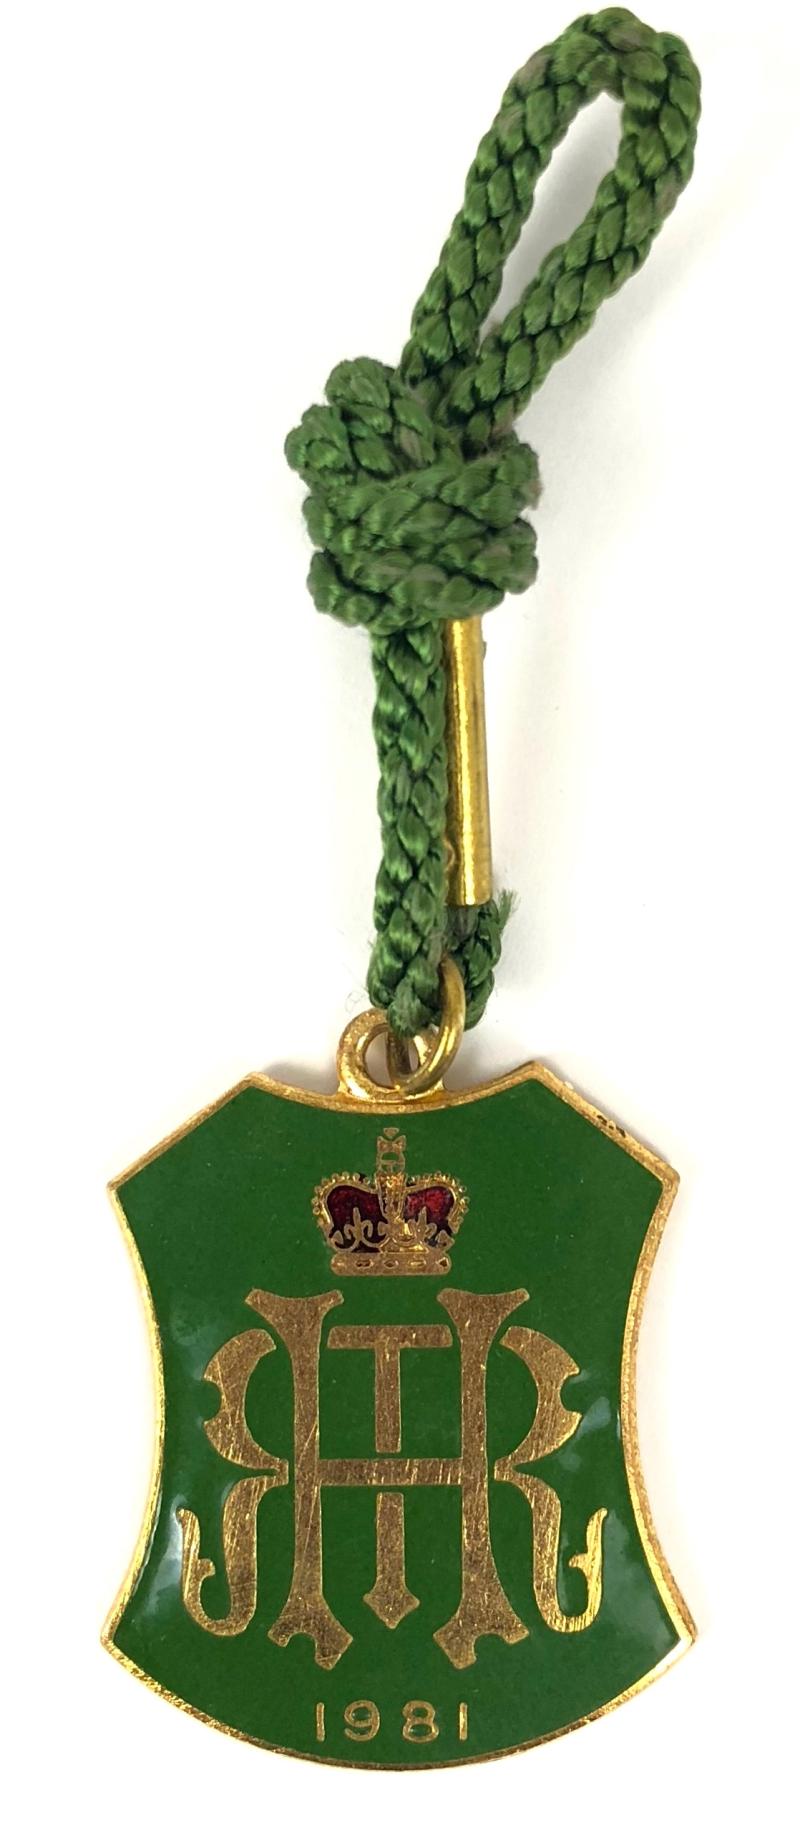 1981 Henley Royal Regatta stewards enclosure badge